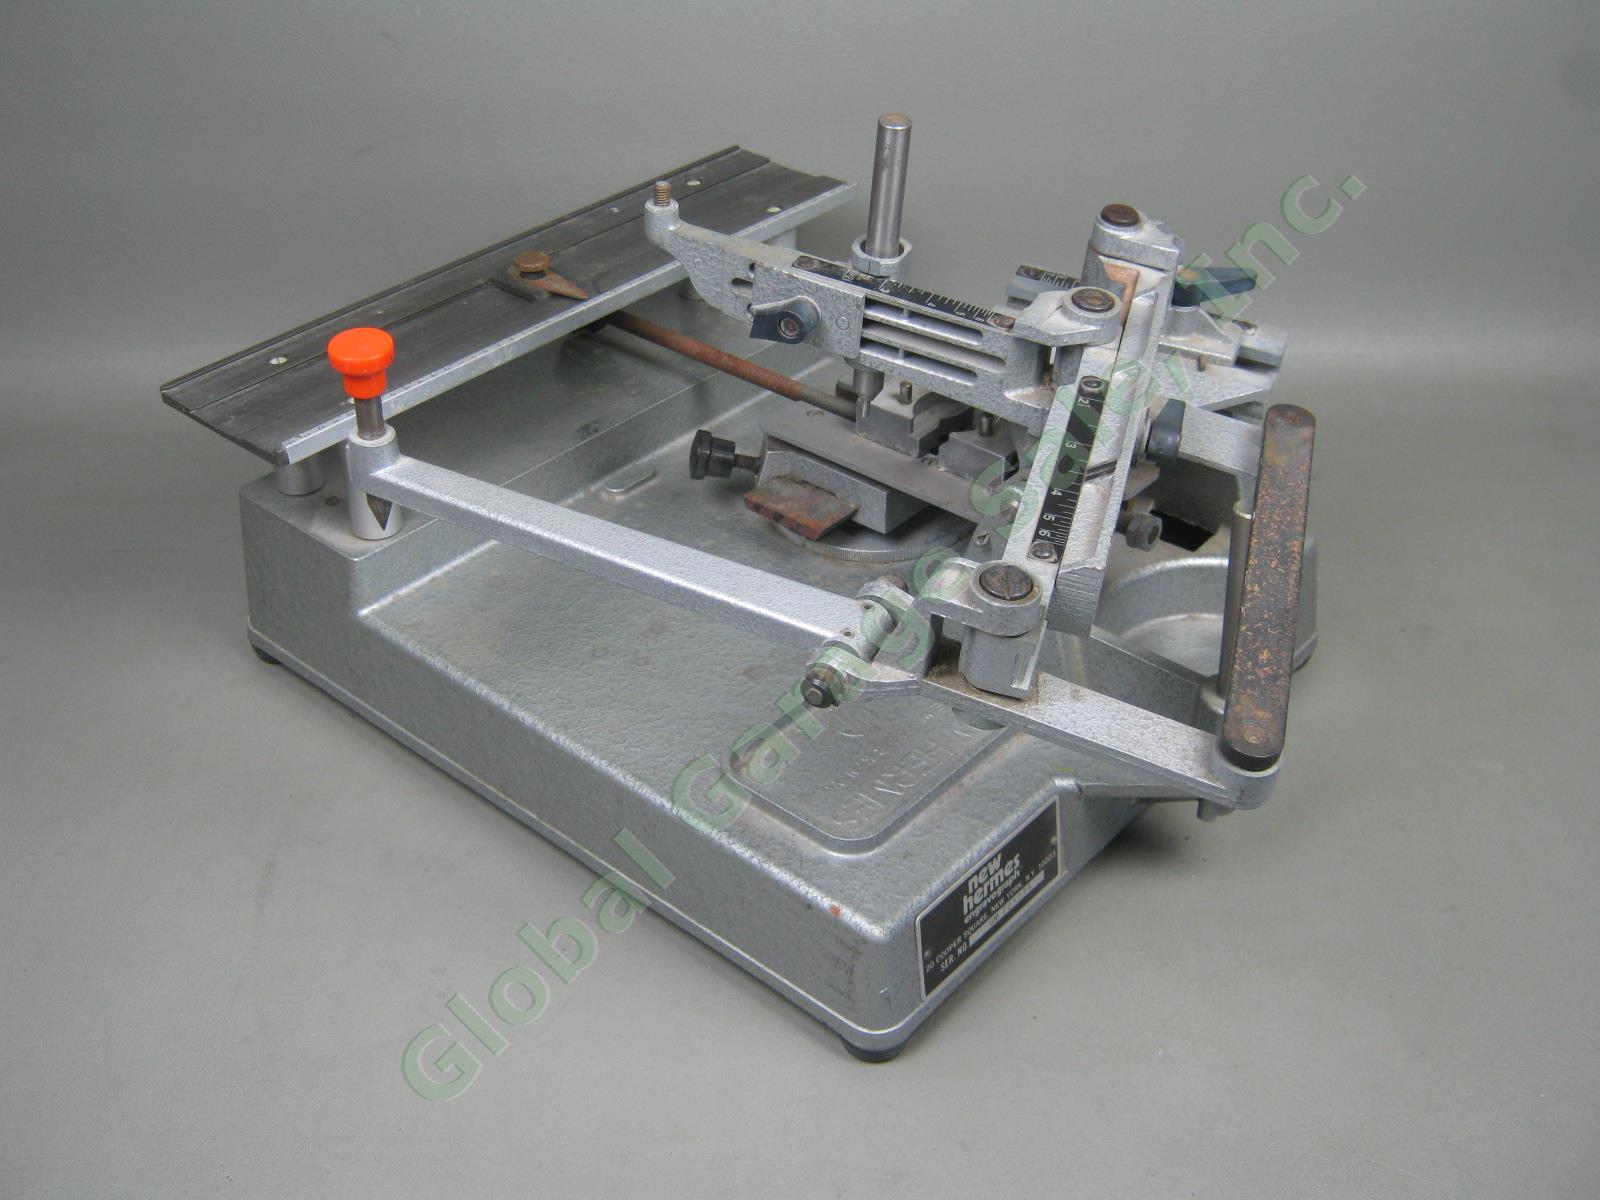 Vtg New Hermes Engravograph Portable Engraving Machine Serial GM 705794 EM-10101 1